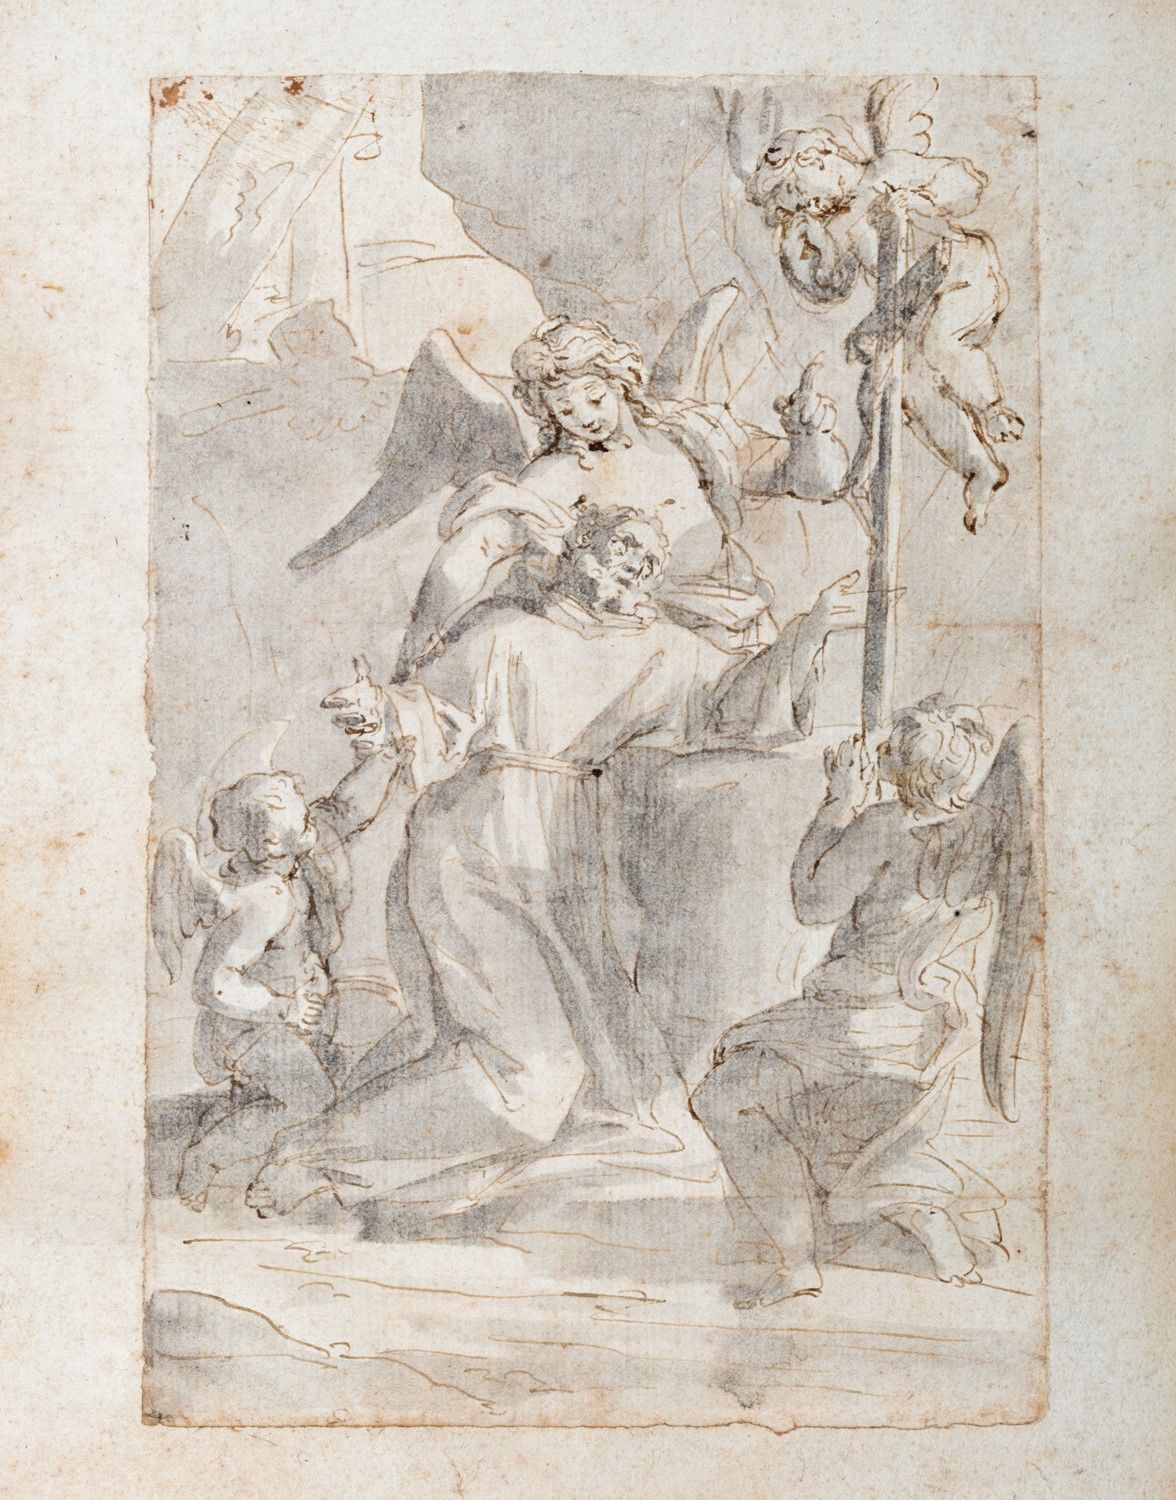 Scuola emiliana, prima metà del secolo XVIII 由天使支撑的圣徒的狂喜

黑色铅笔和灰色水彩在纸上铺设
196 x 1&hellip;